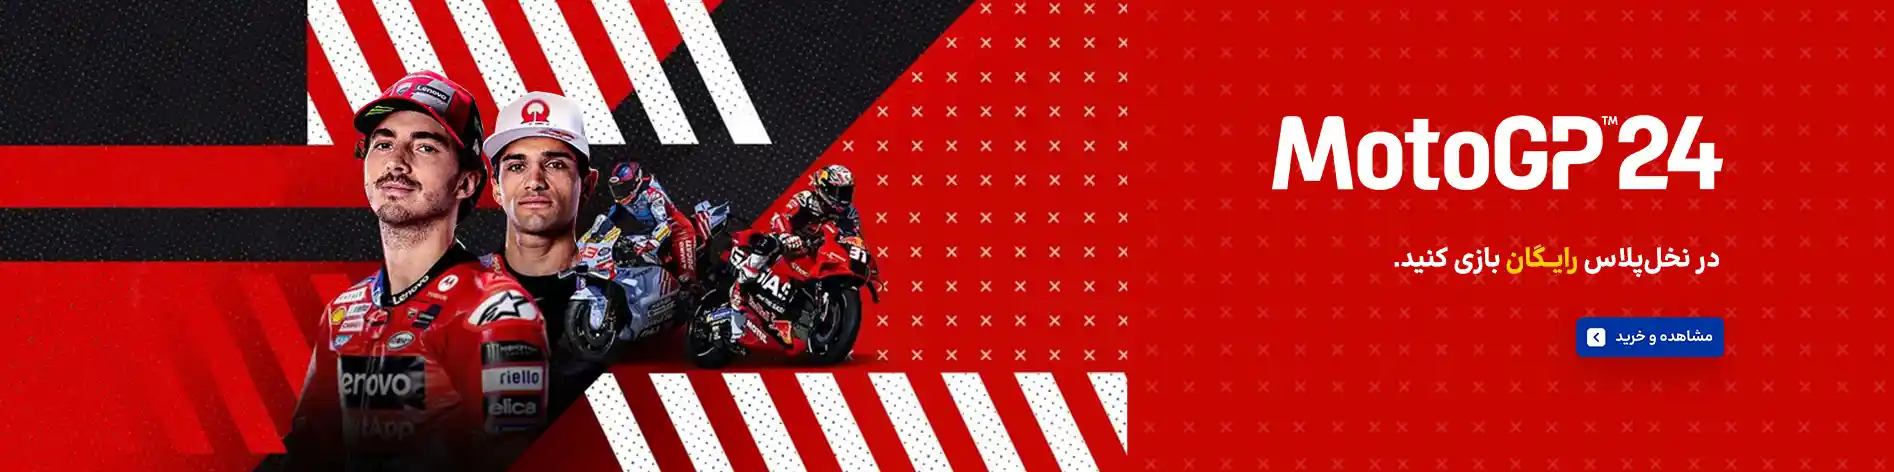 MotoGP24 1